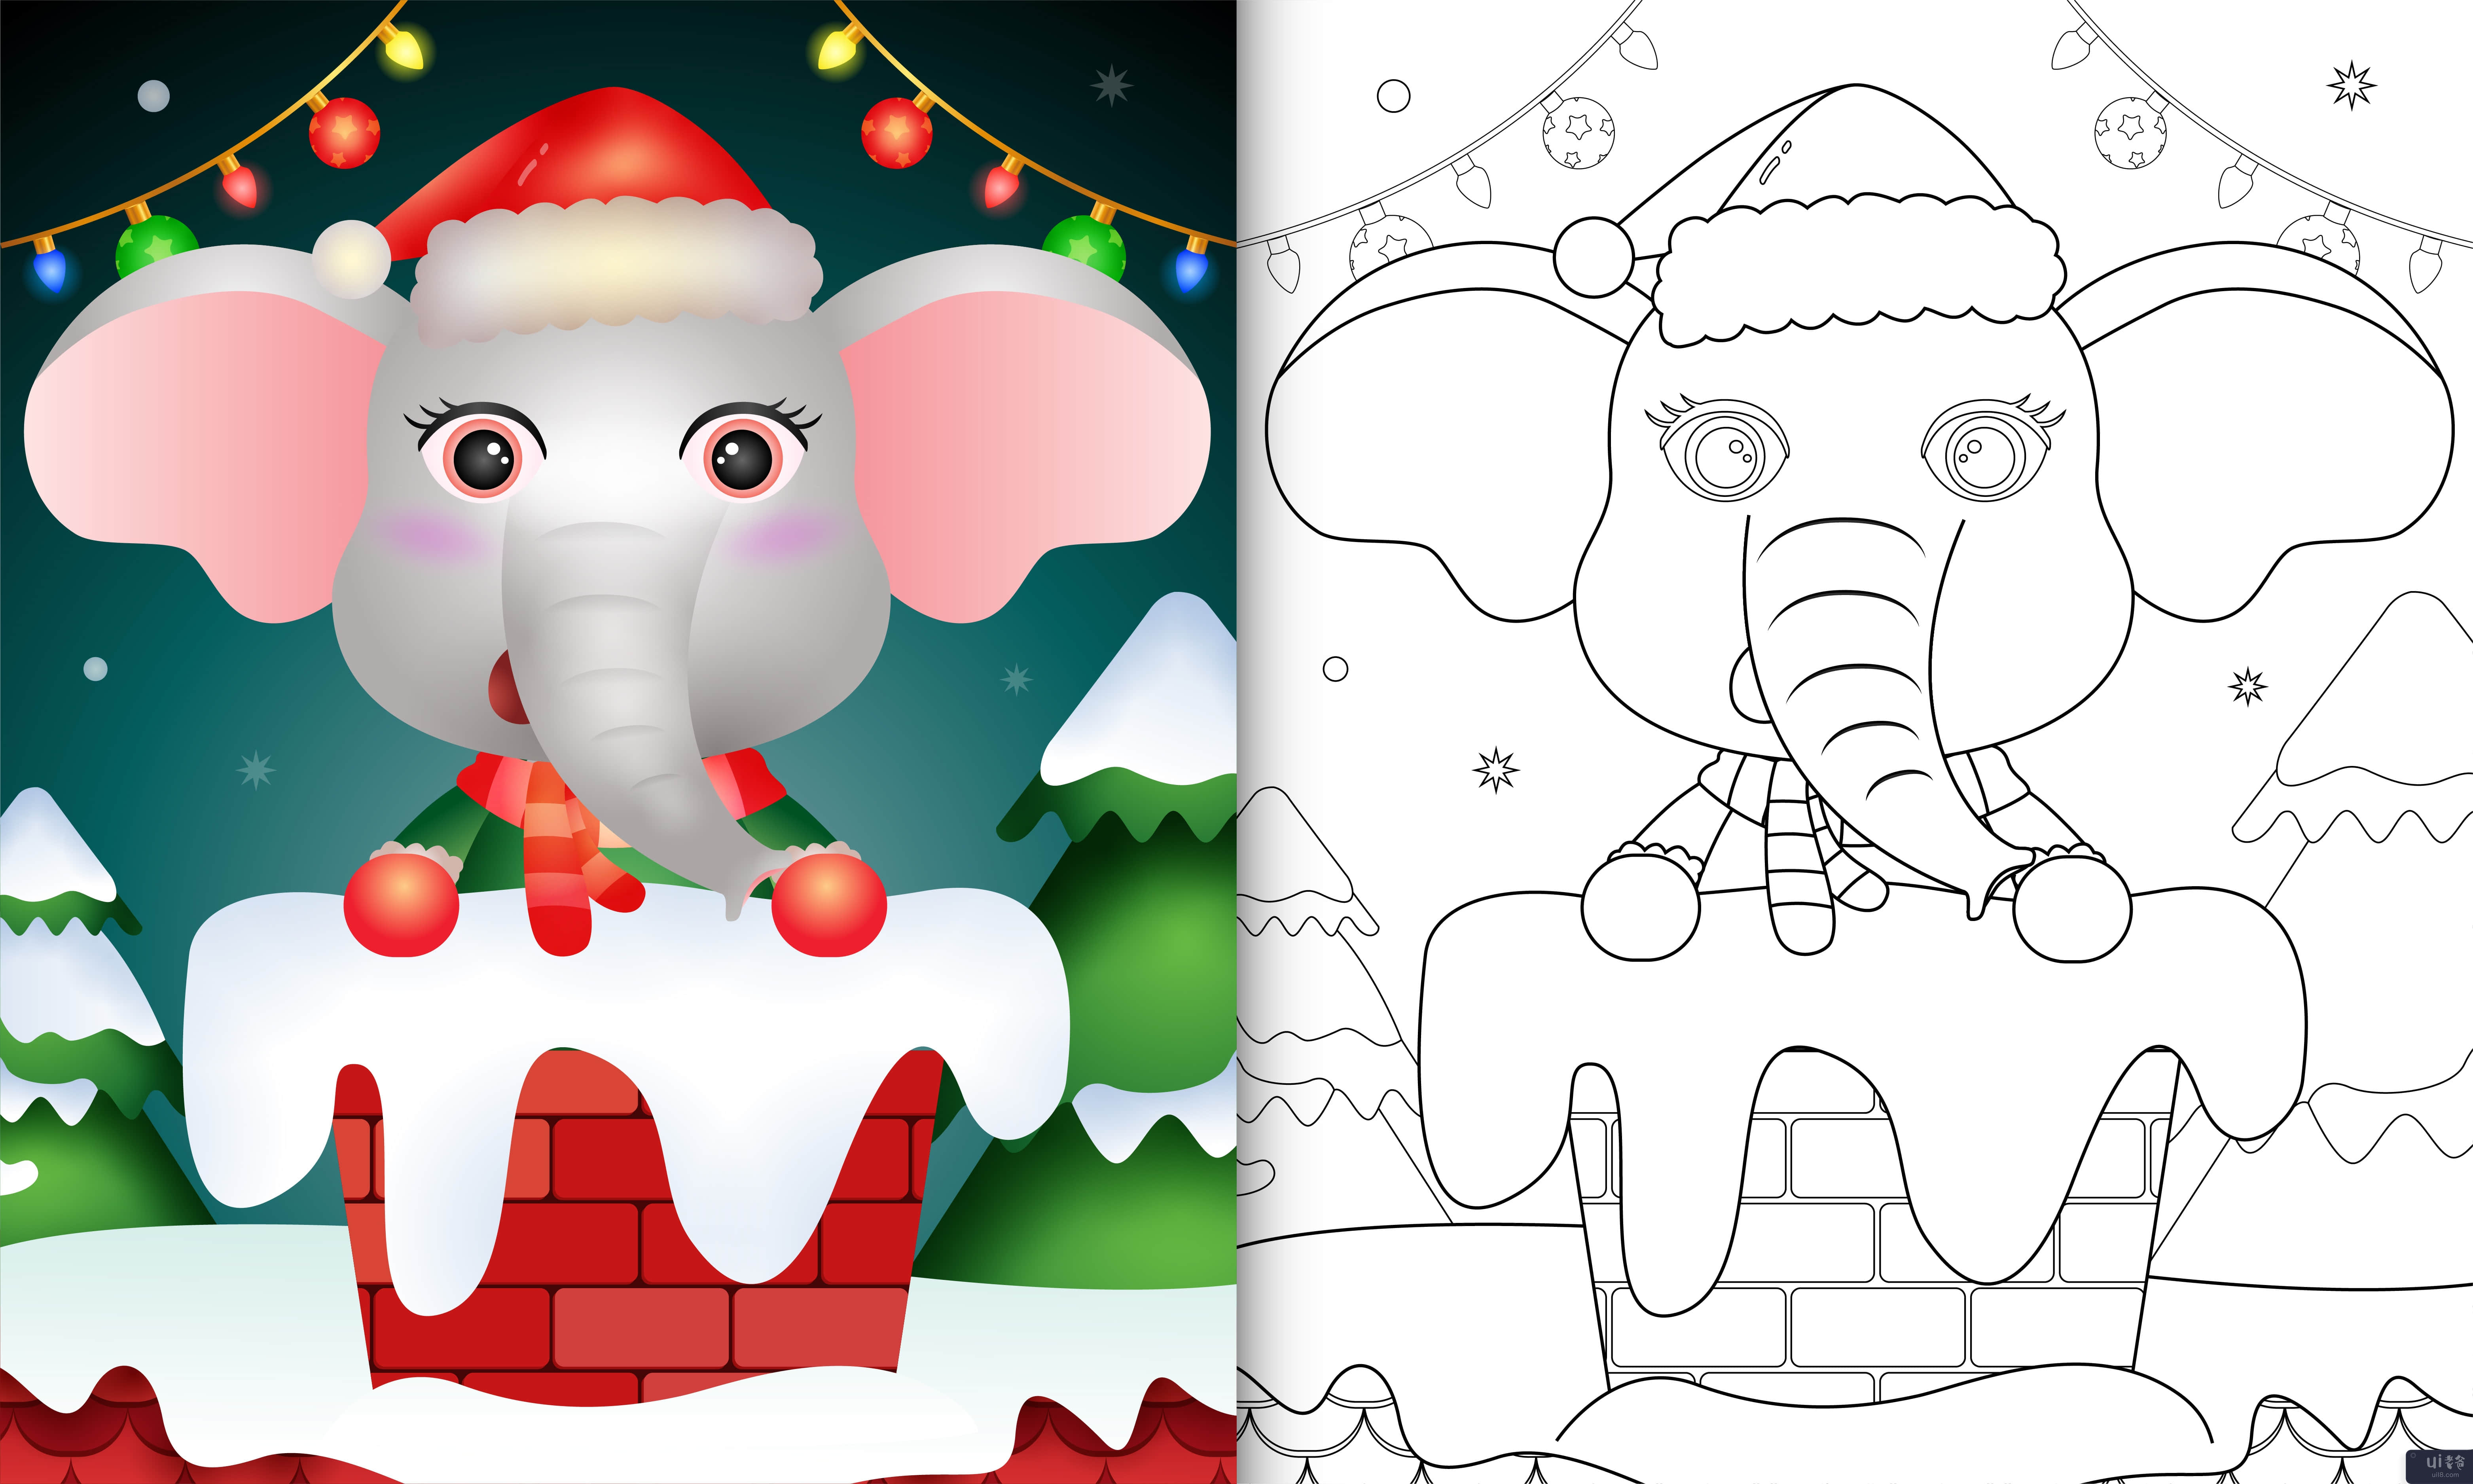 用圣诞老人的帽子和围巾在烟囱里给孩子们涂上可爱的大象(coloring for kids with a cute elephant using santa hat and scarf in chimney)插图2